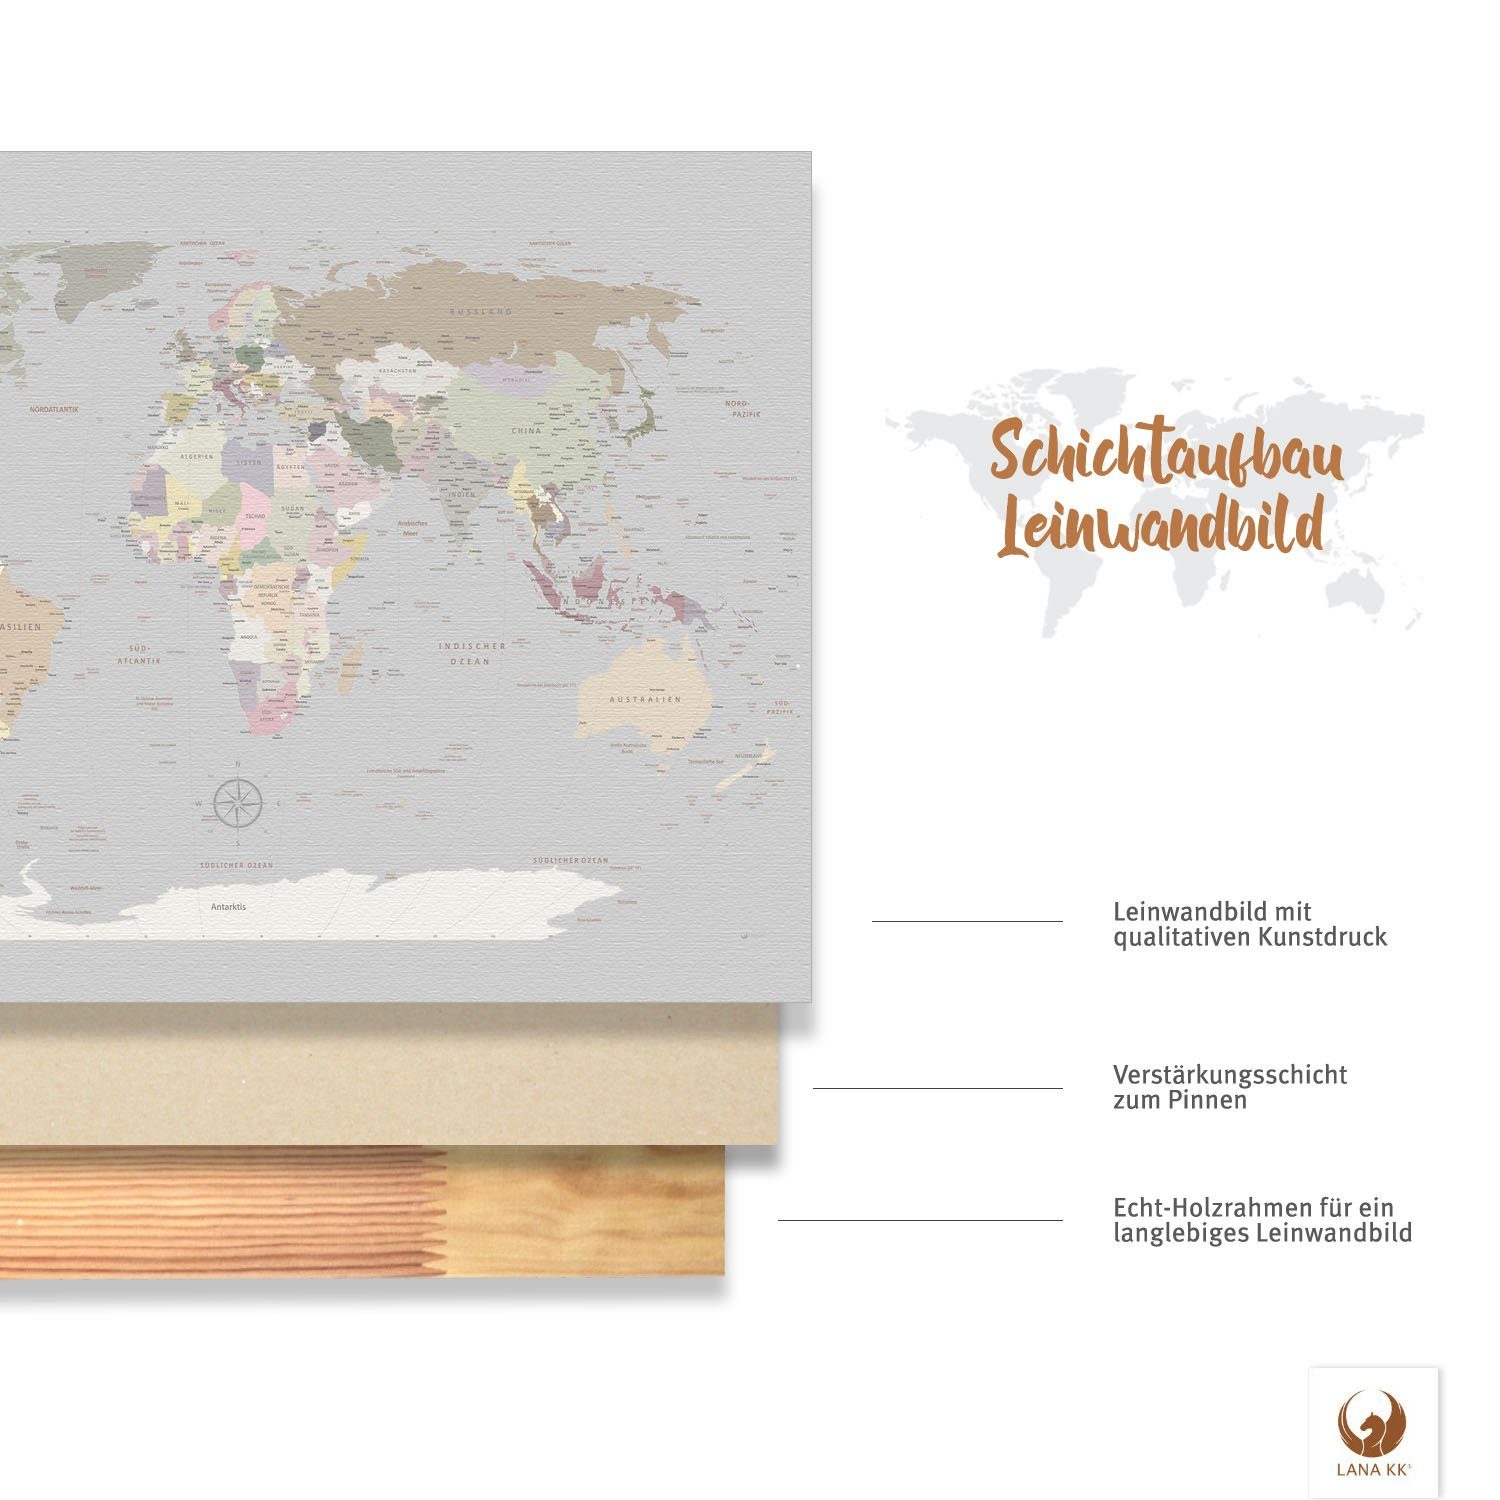 LANA KK Leinwandbild Weltkarte Reisezielen, Light Beschriftung von markieren deutsche zum Pinnwand